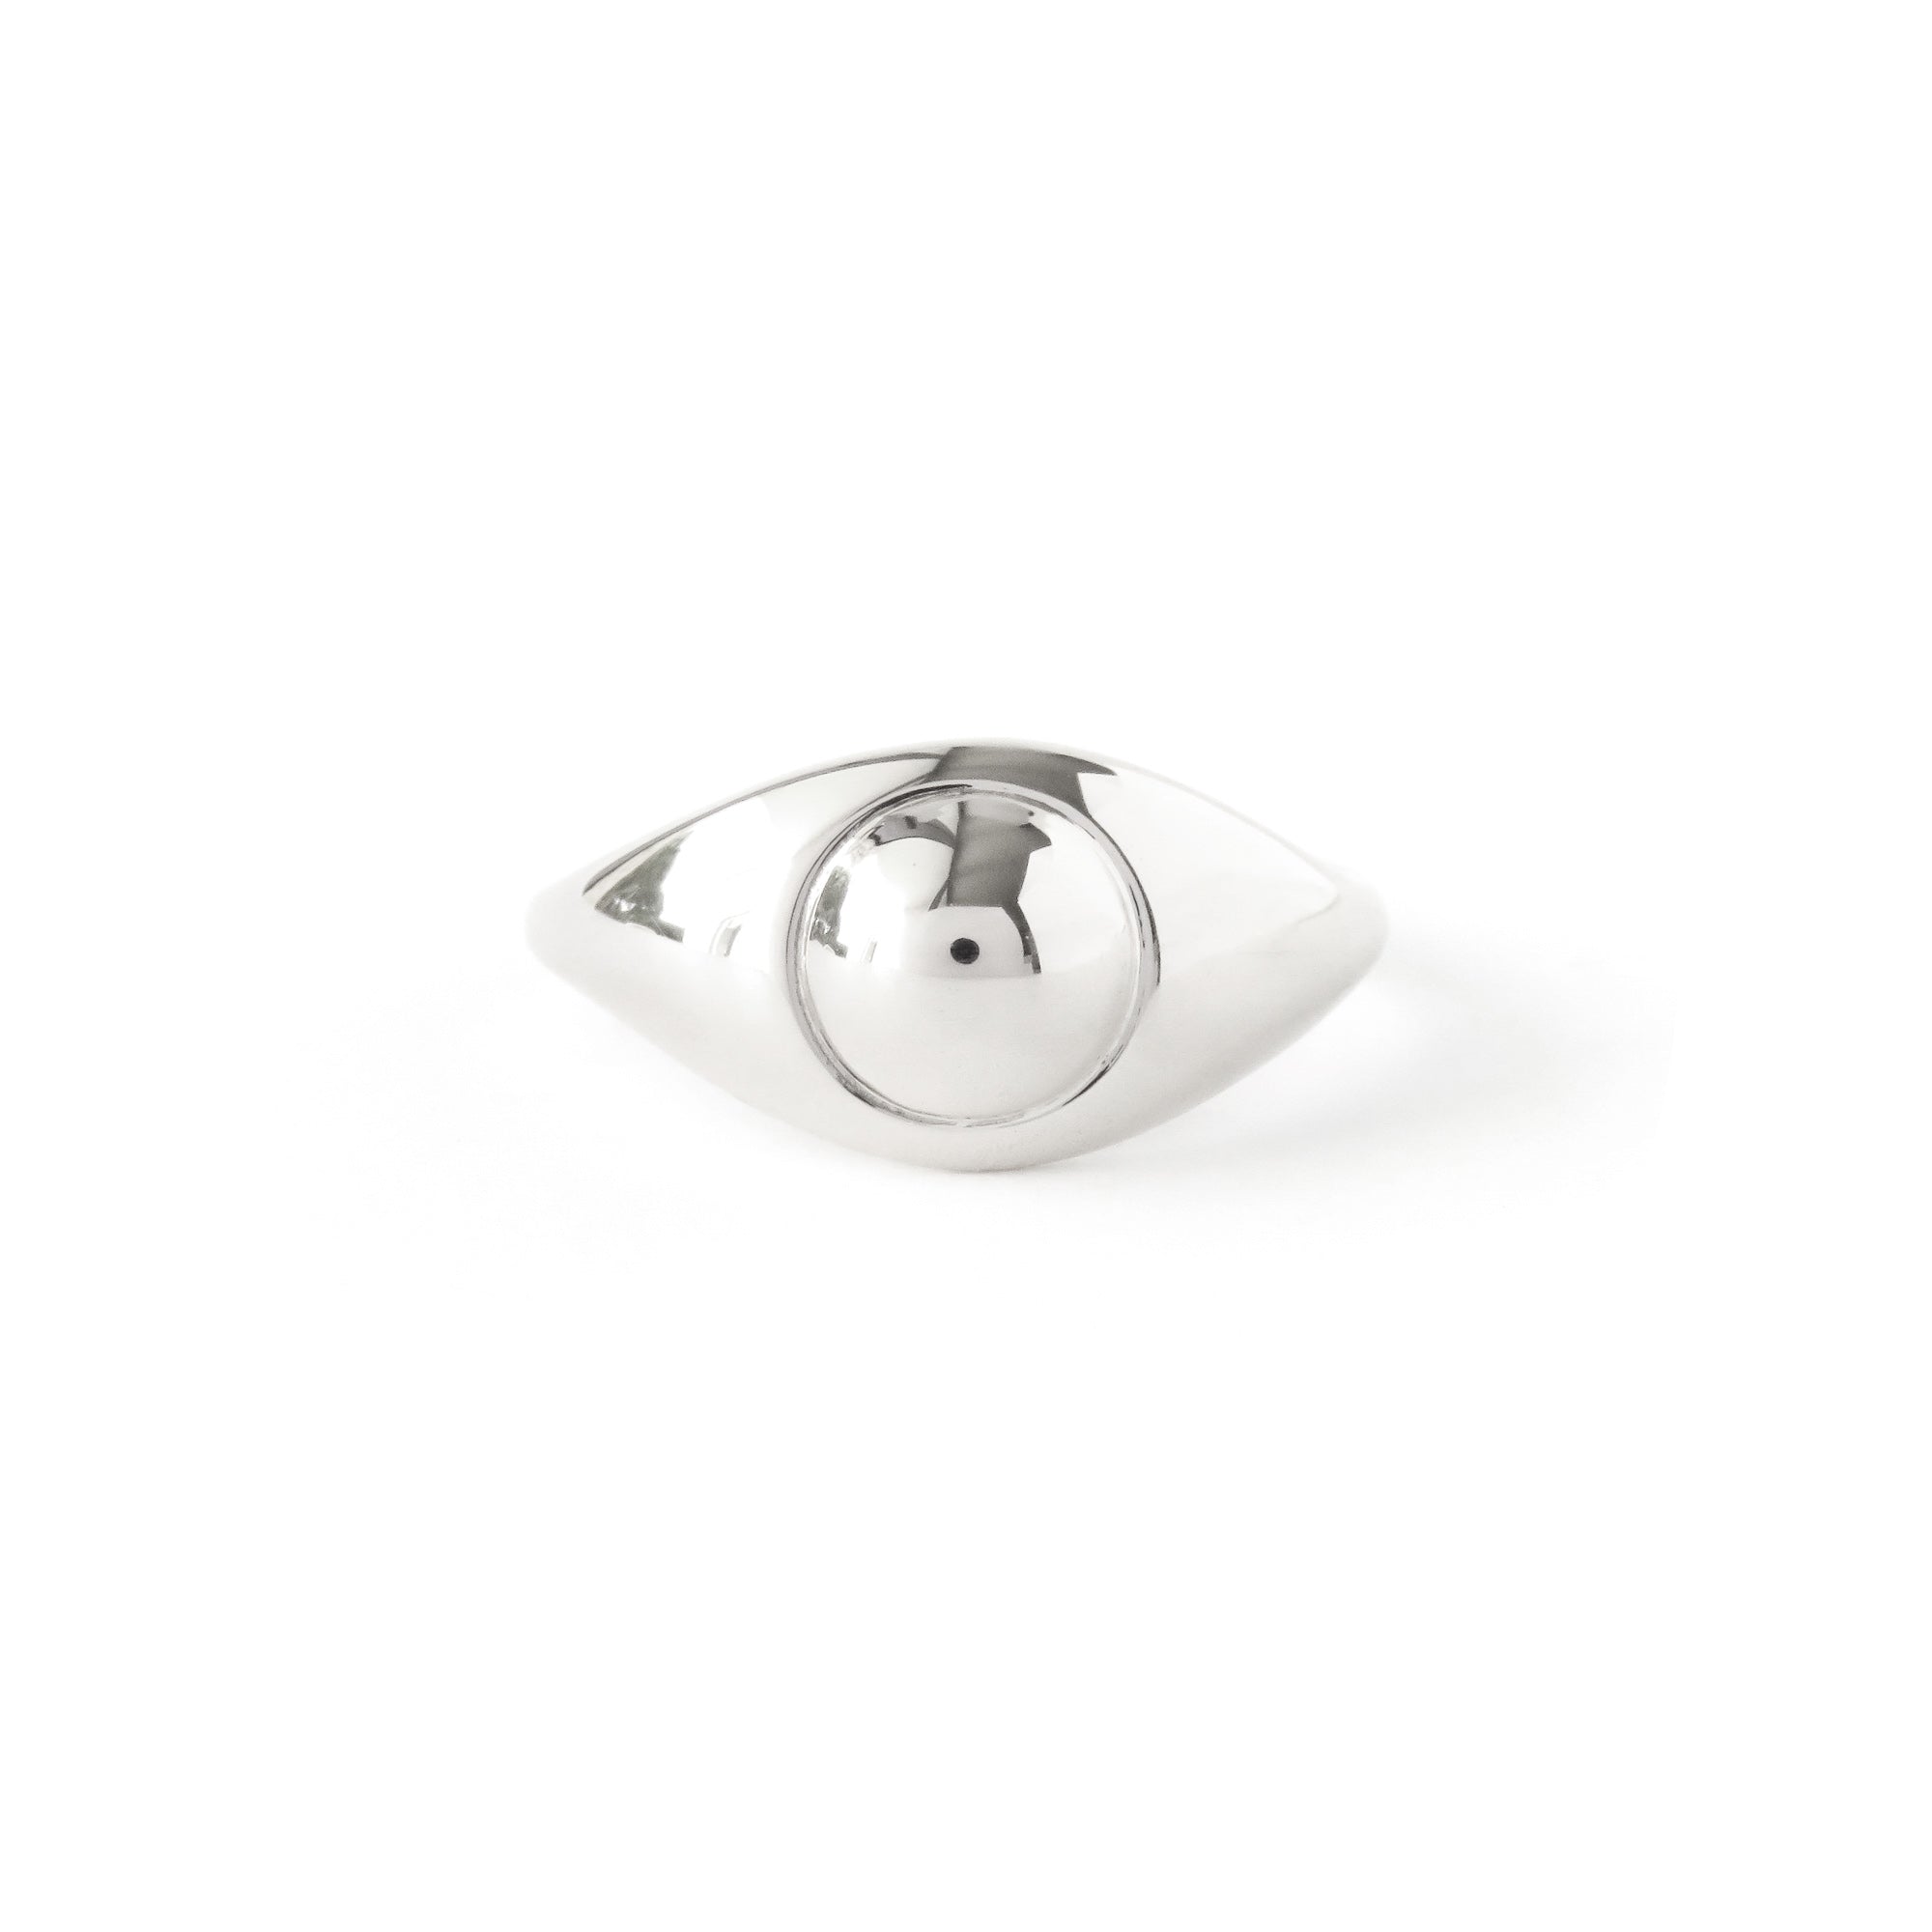 Ring Size Kit – Dear Rae Jewellery International